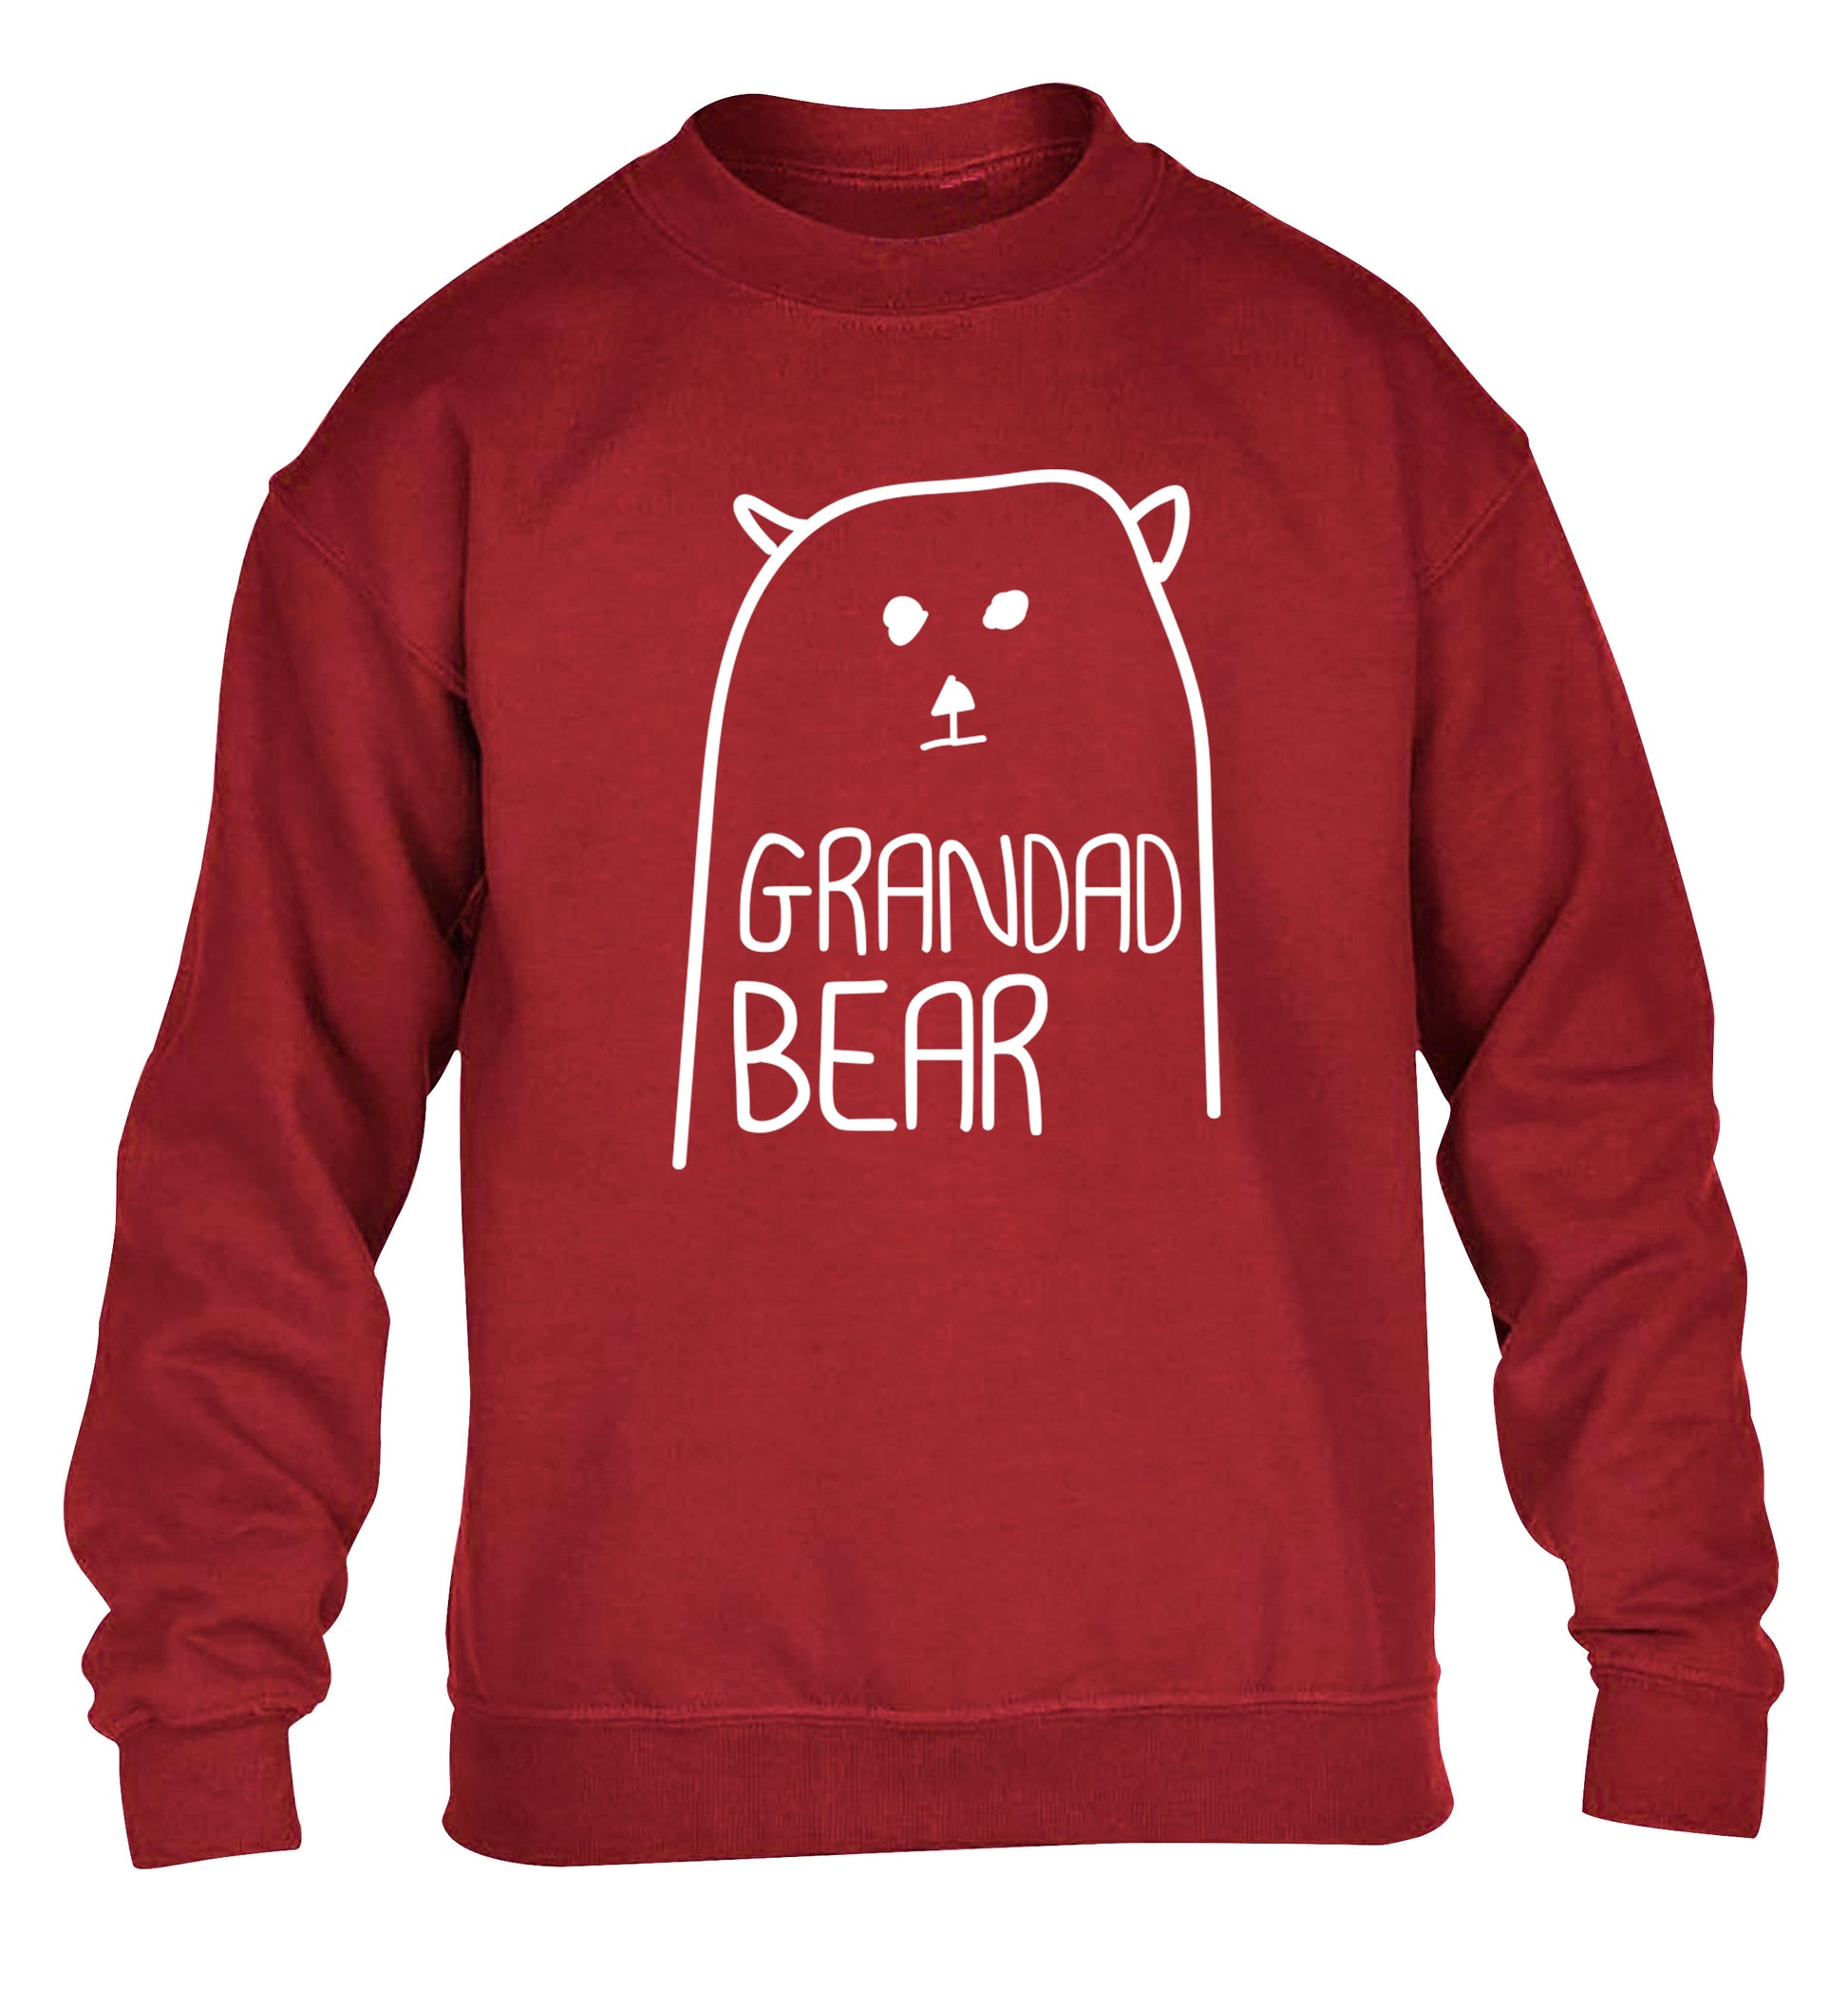 Grandad bear children's grey sweater 12-13 Years